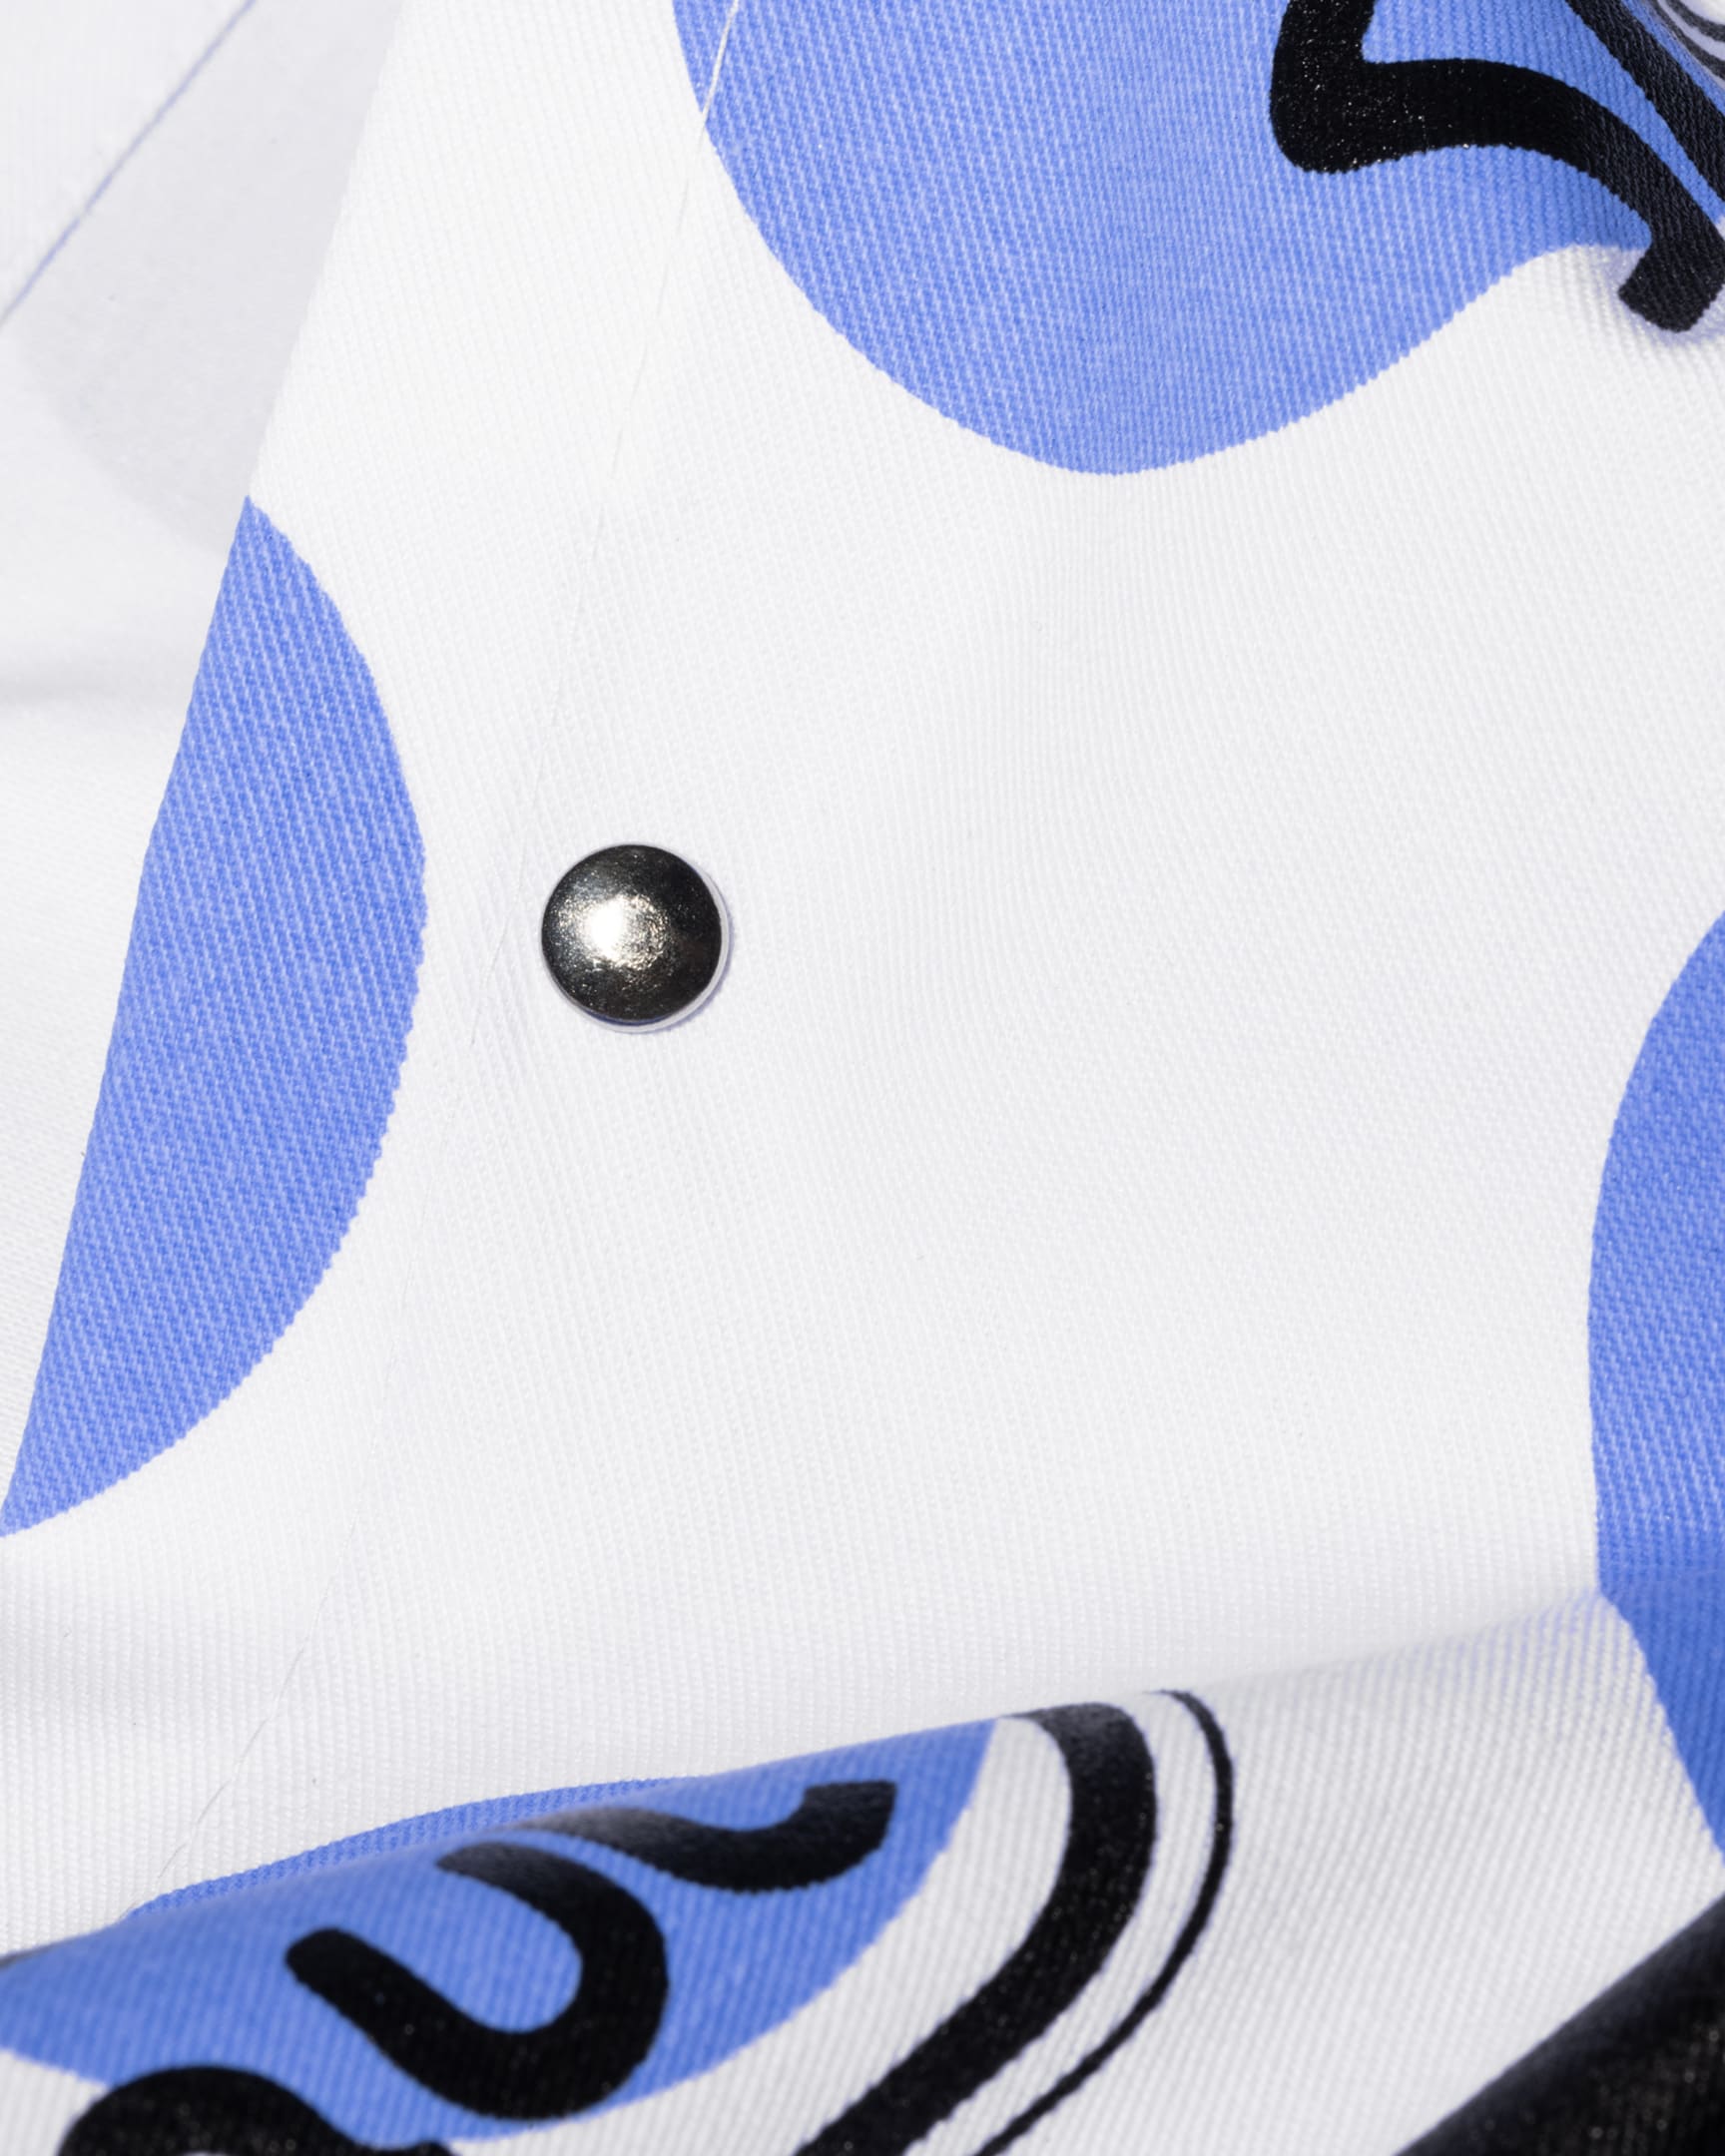 Detail View - Blue Polka Dot Cycling Musette Bag Paul Smith